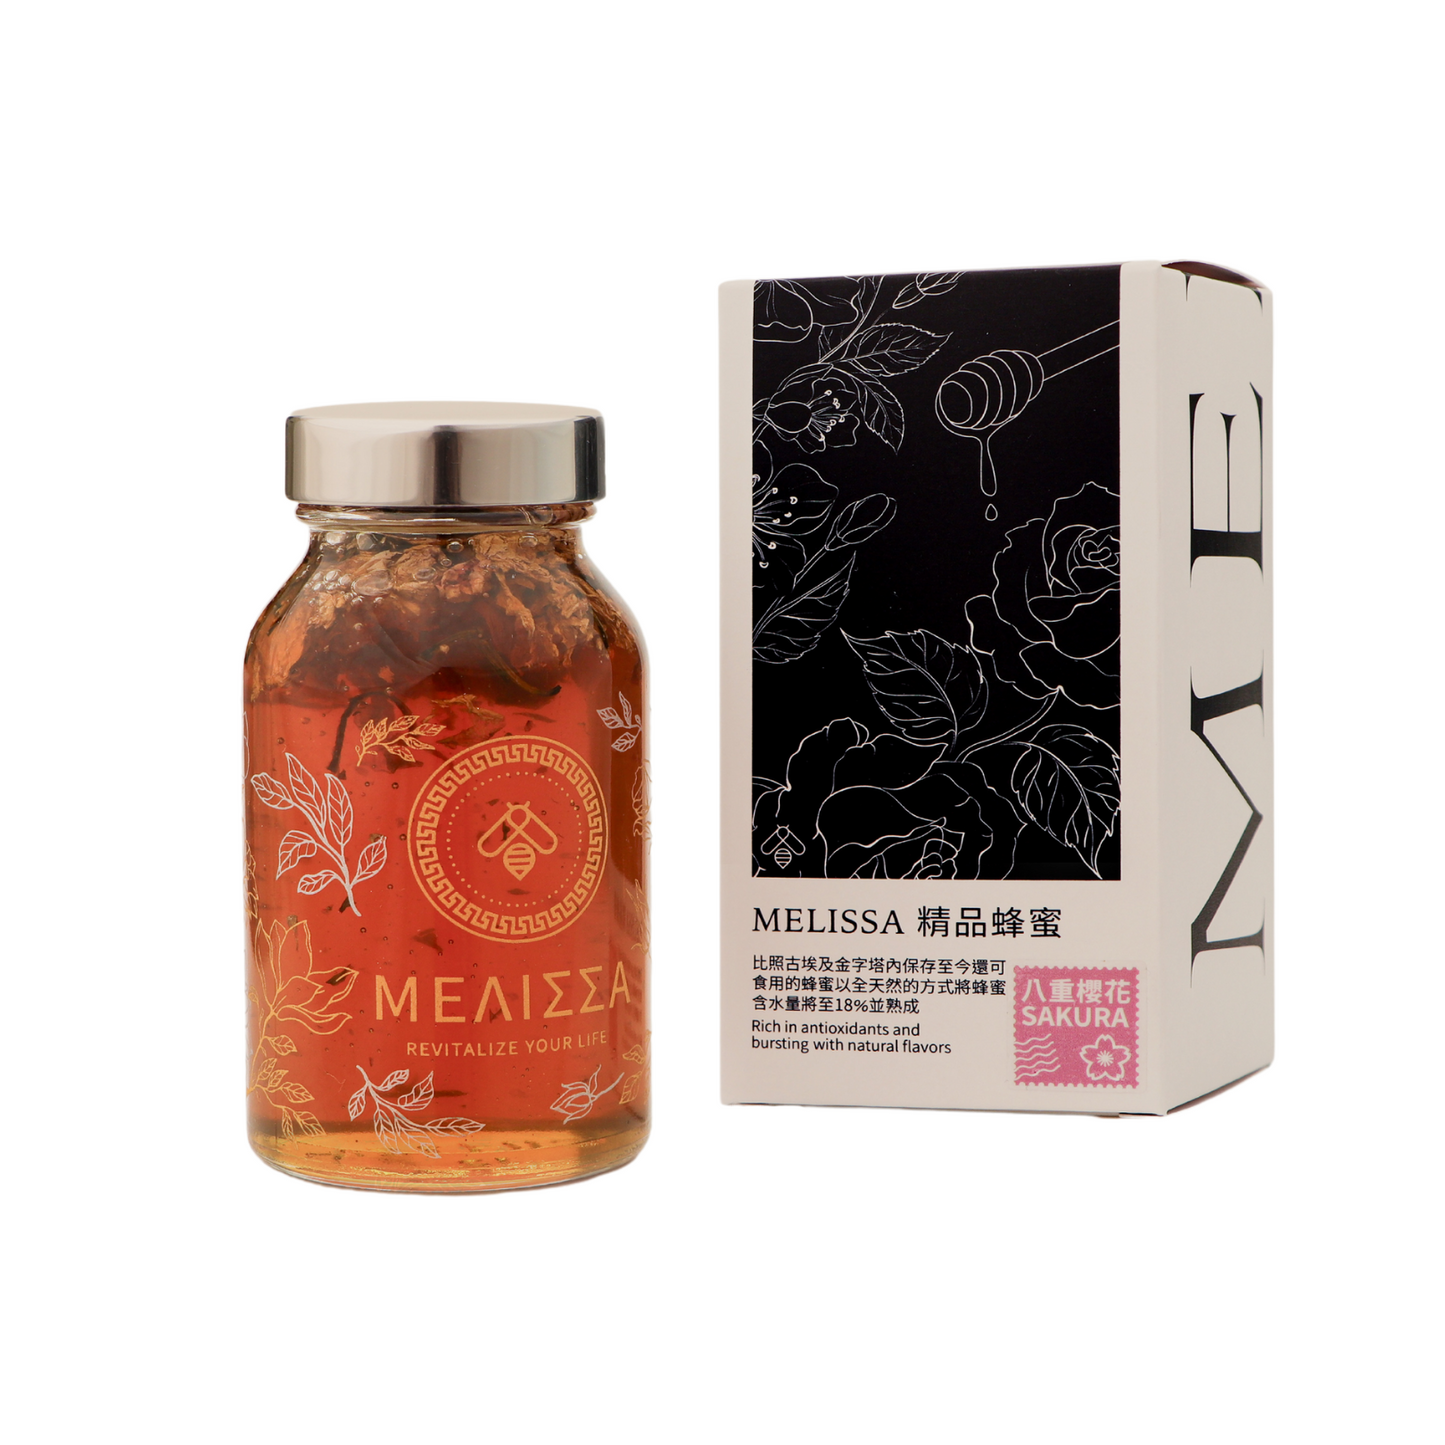 MELISSA蜂蜜 210g - 含日本八重櫻花